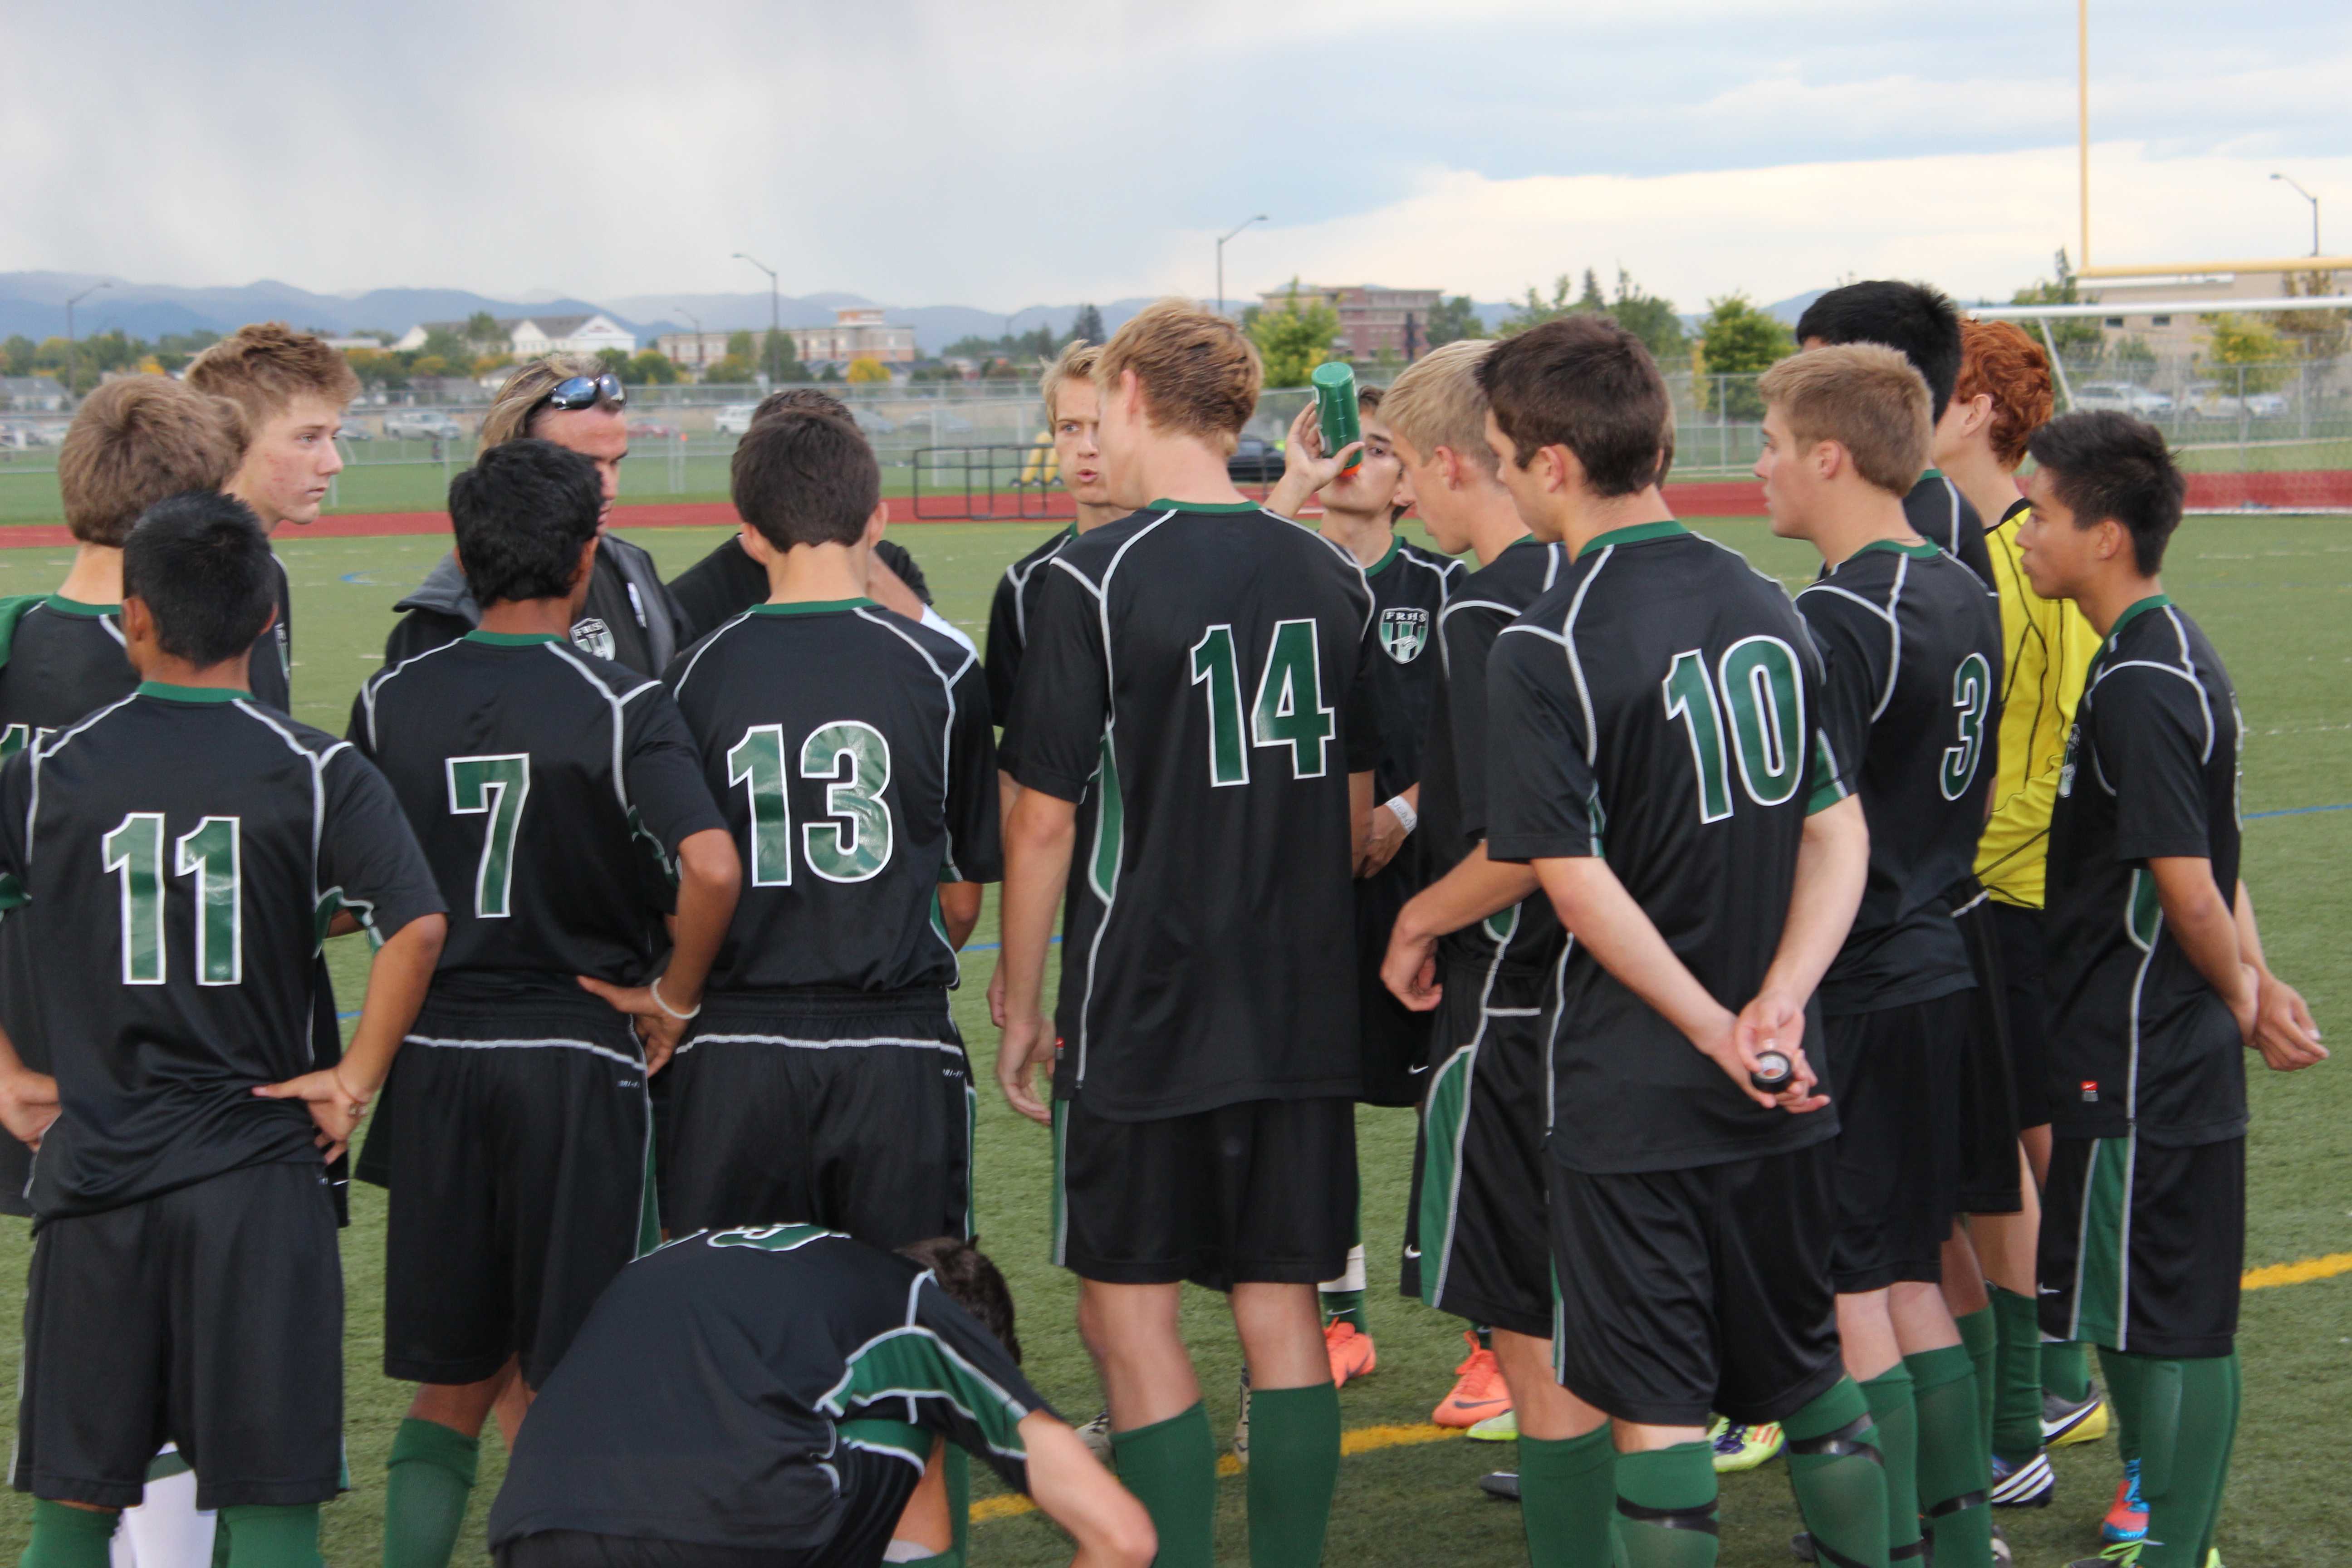 Team gathering together at halftime. 
Photo credit: Dylan Cox